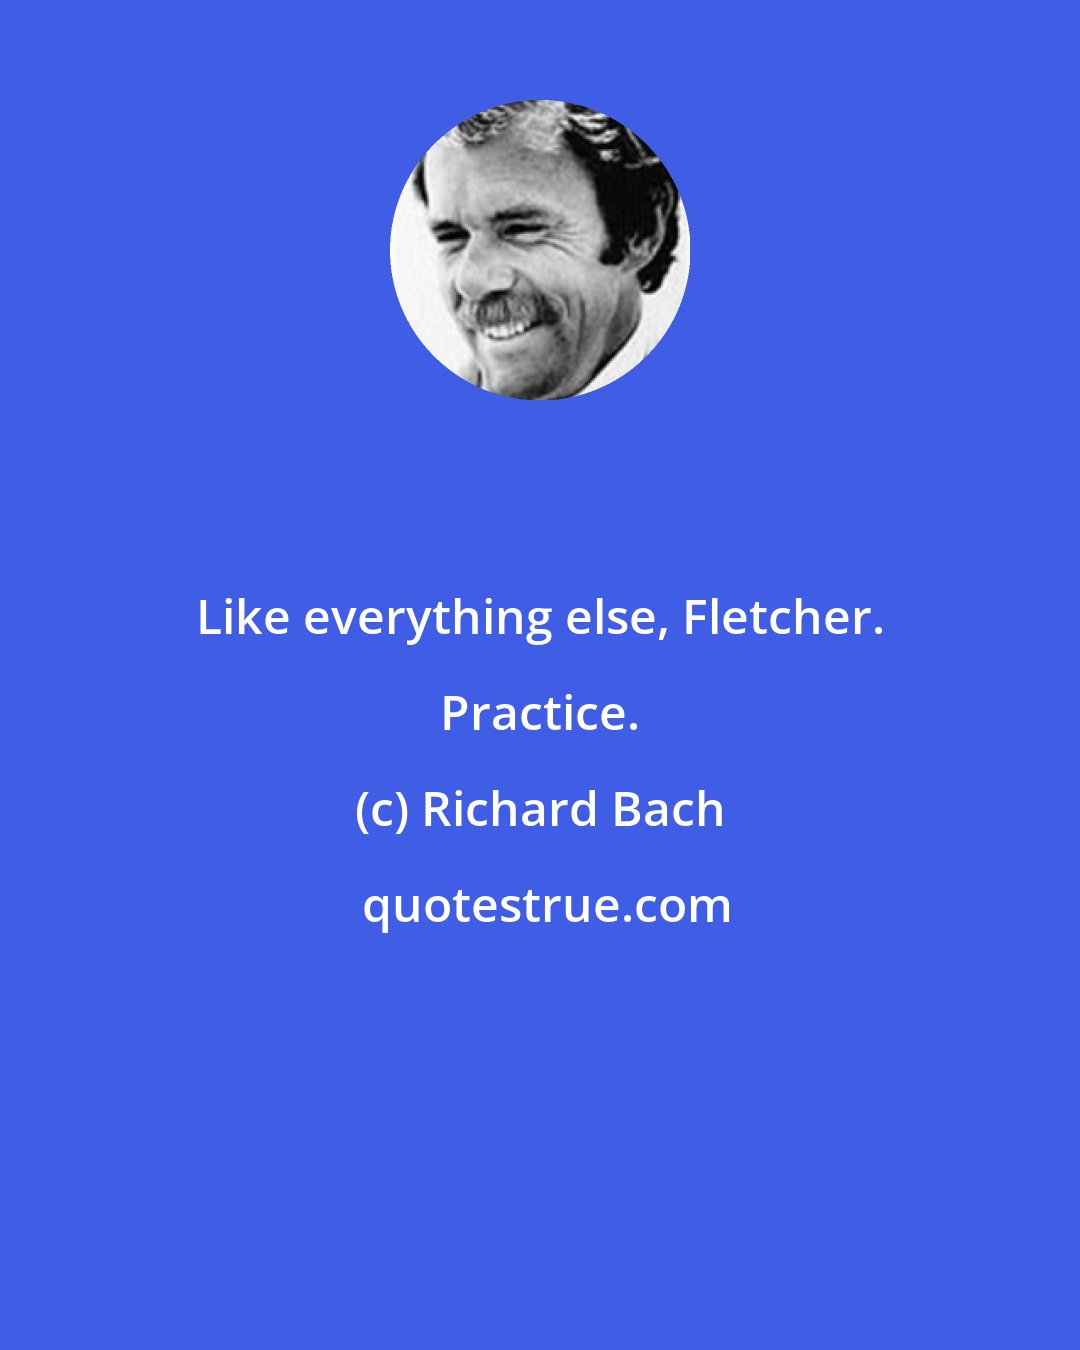 Richard Bach: Like everything else, Fletcher. Practice.